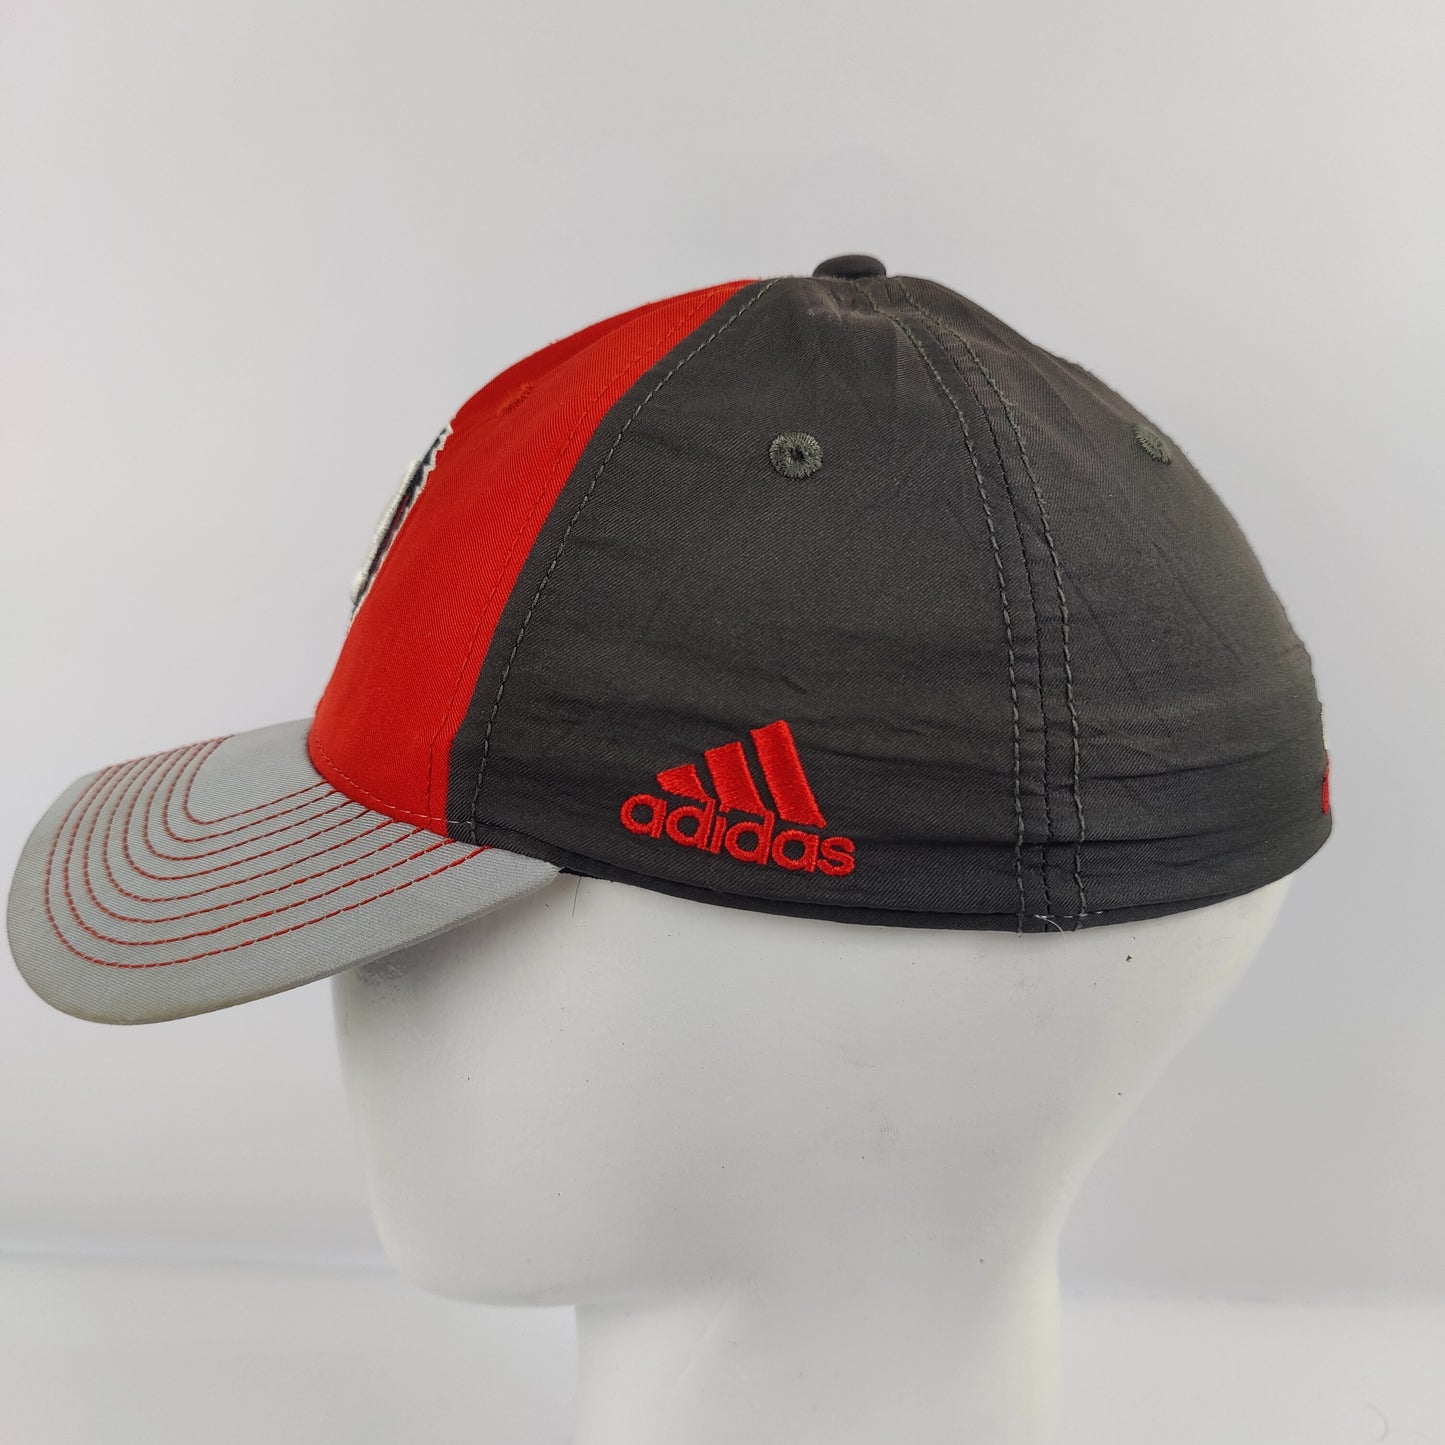 Adidas Ottawa Red Blacks Baseball Cap - Black - 1080